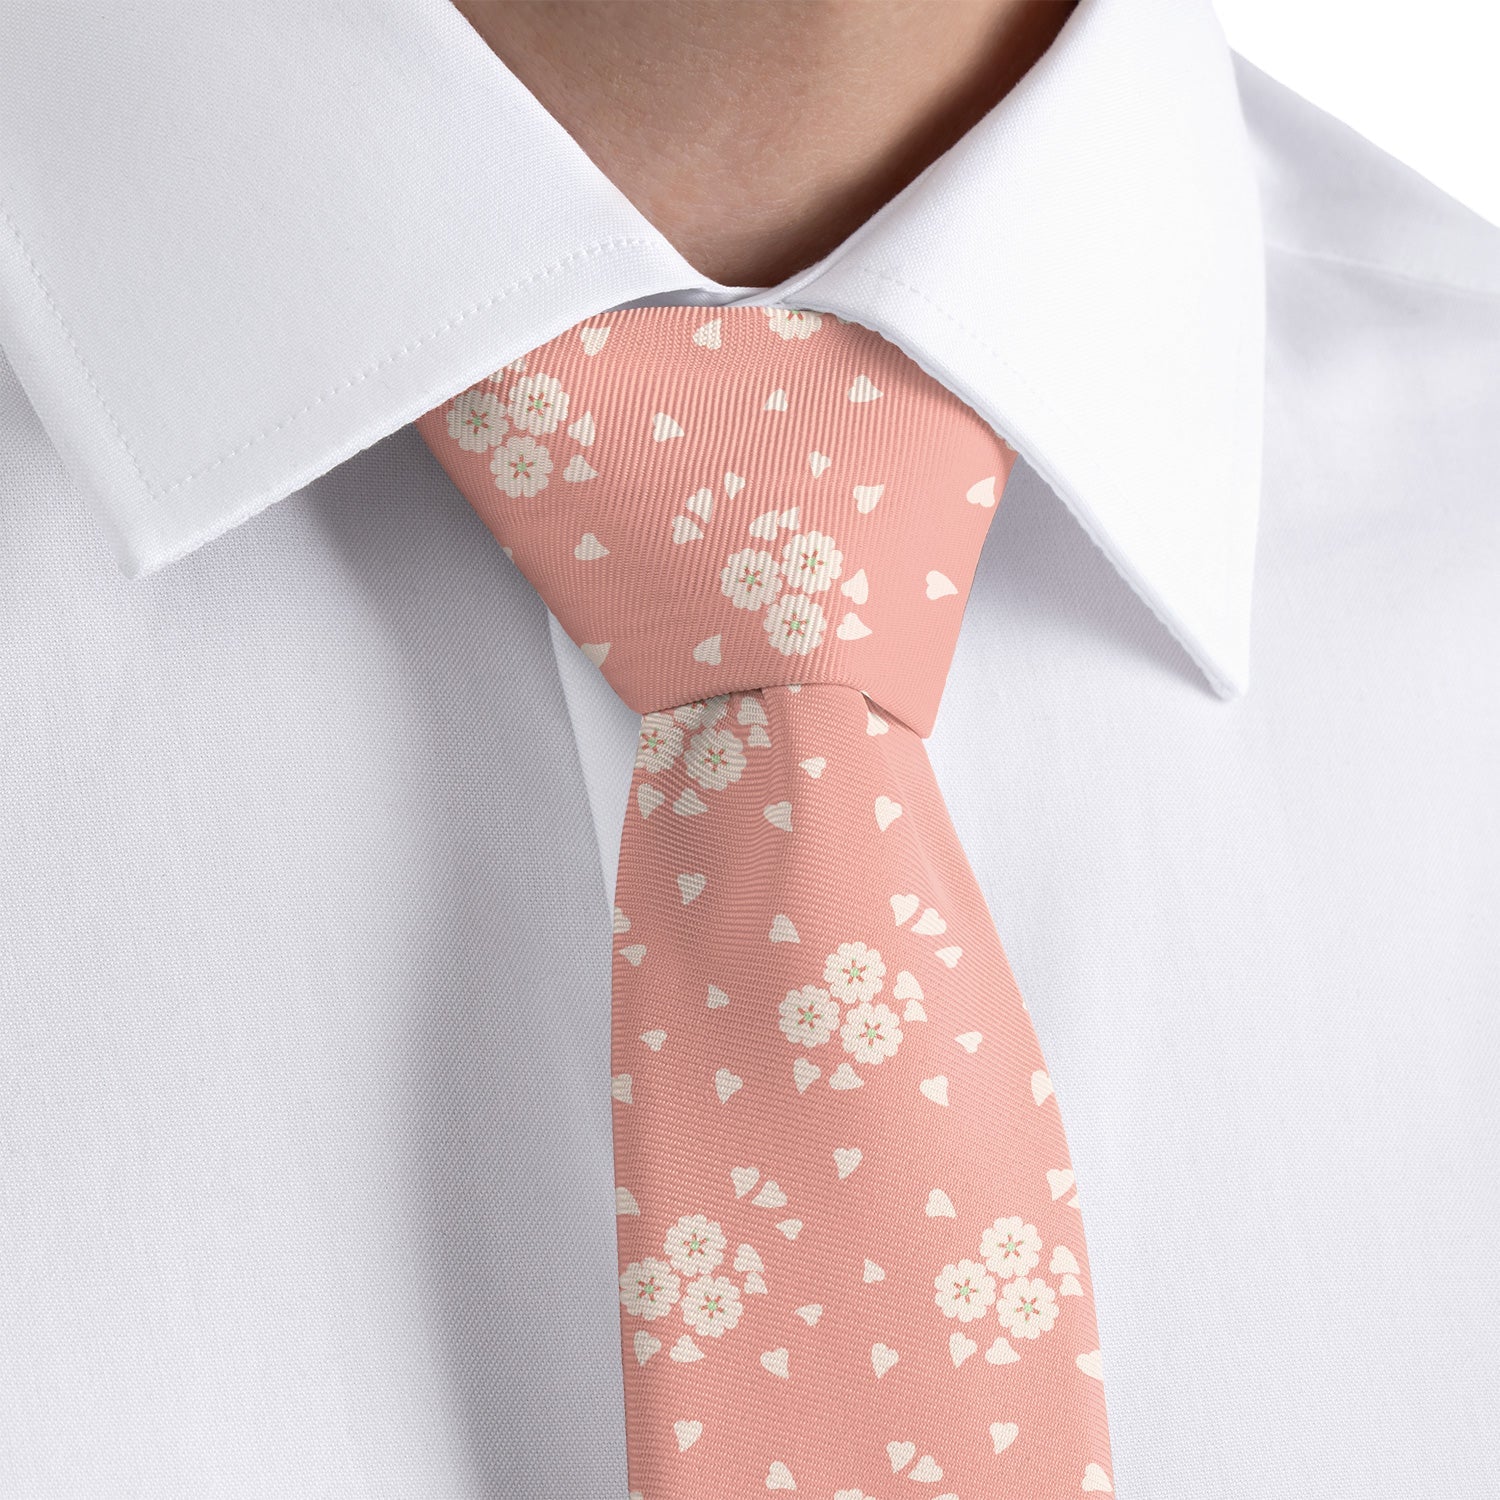 Cherry Blossom Necktie - Rolled - Knotty Tie Co.